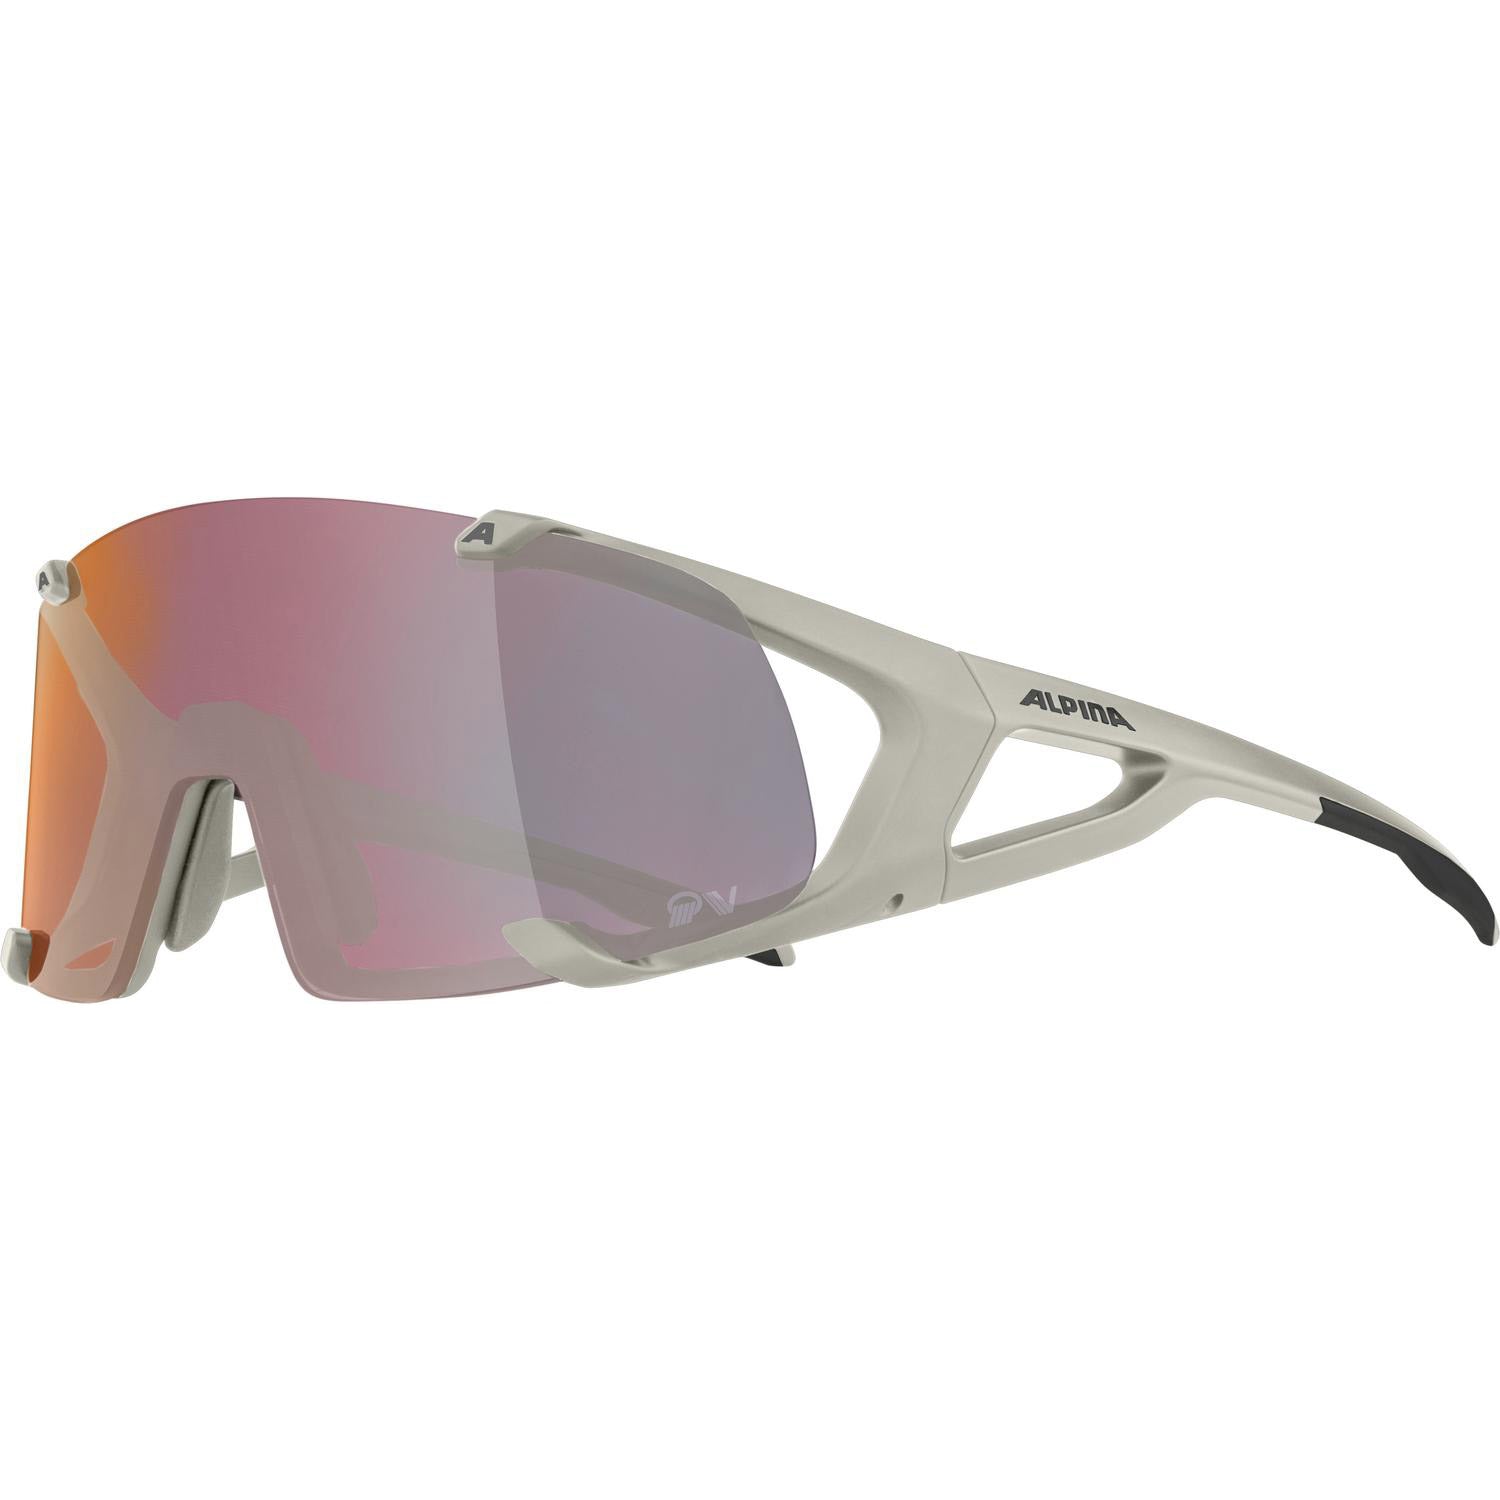 Alpina glasses HAWKEYE QV fogst. cool-grey/rainbow mirr.Cat.1-3